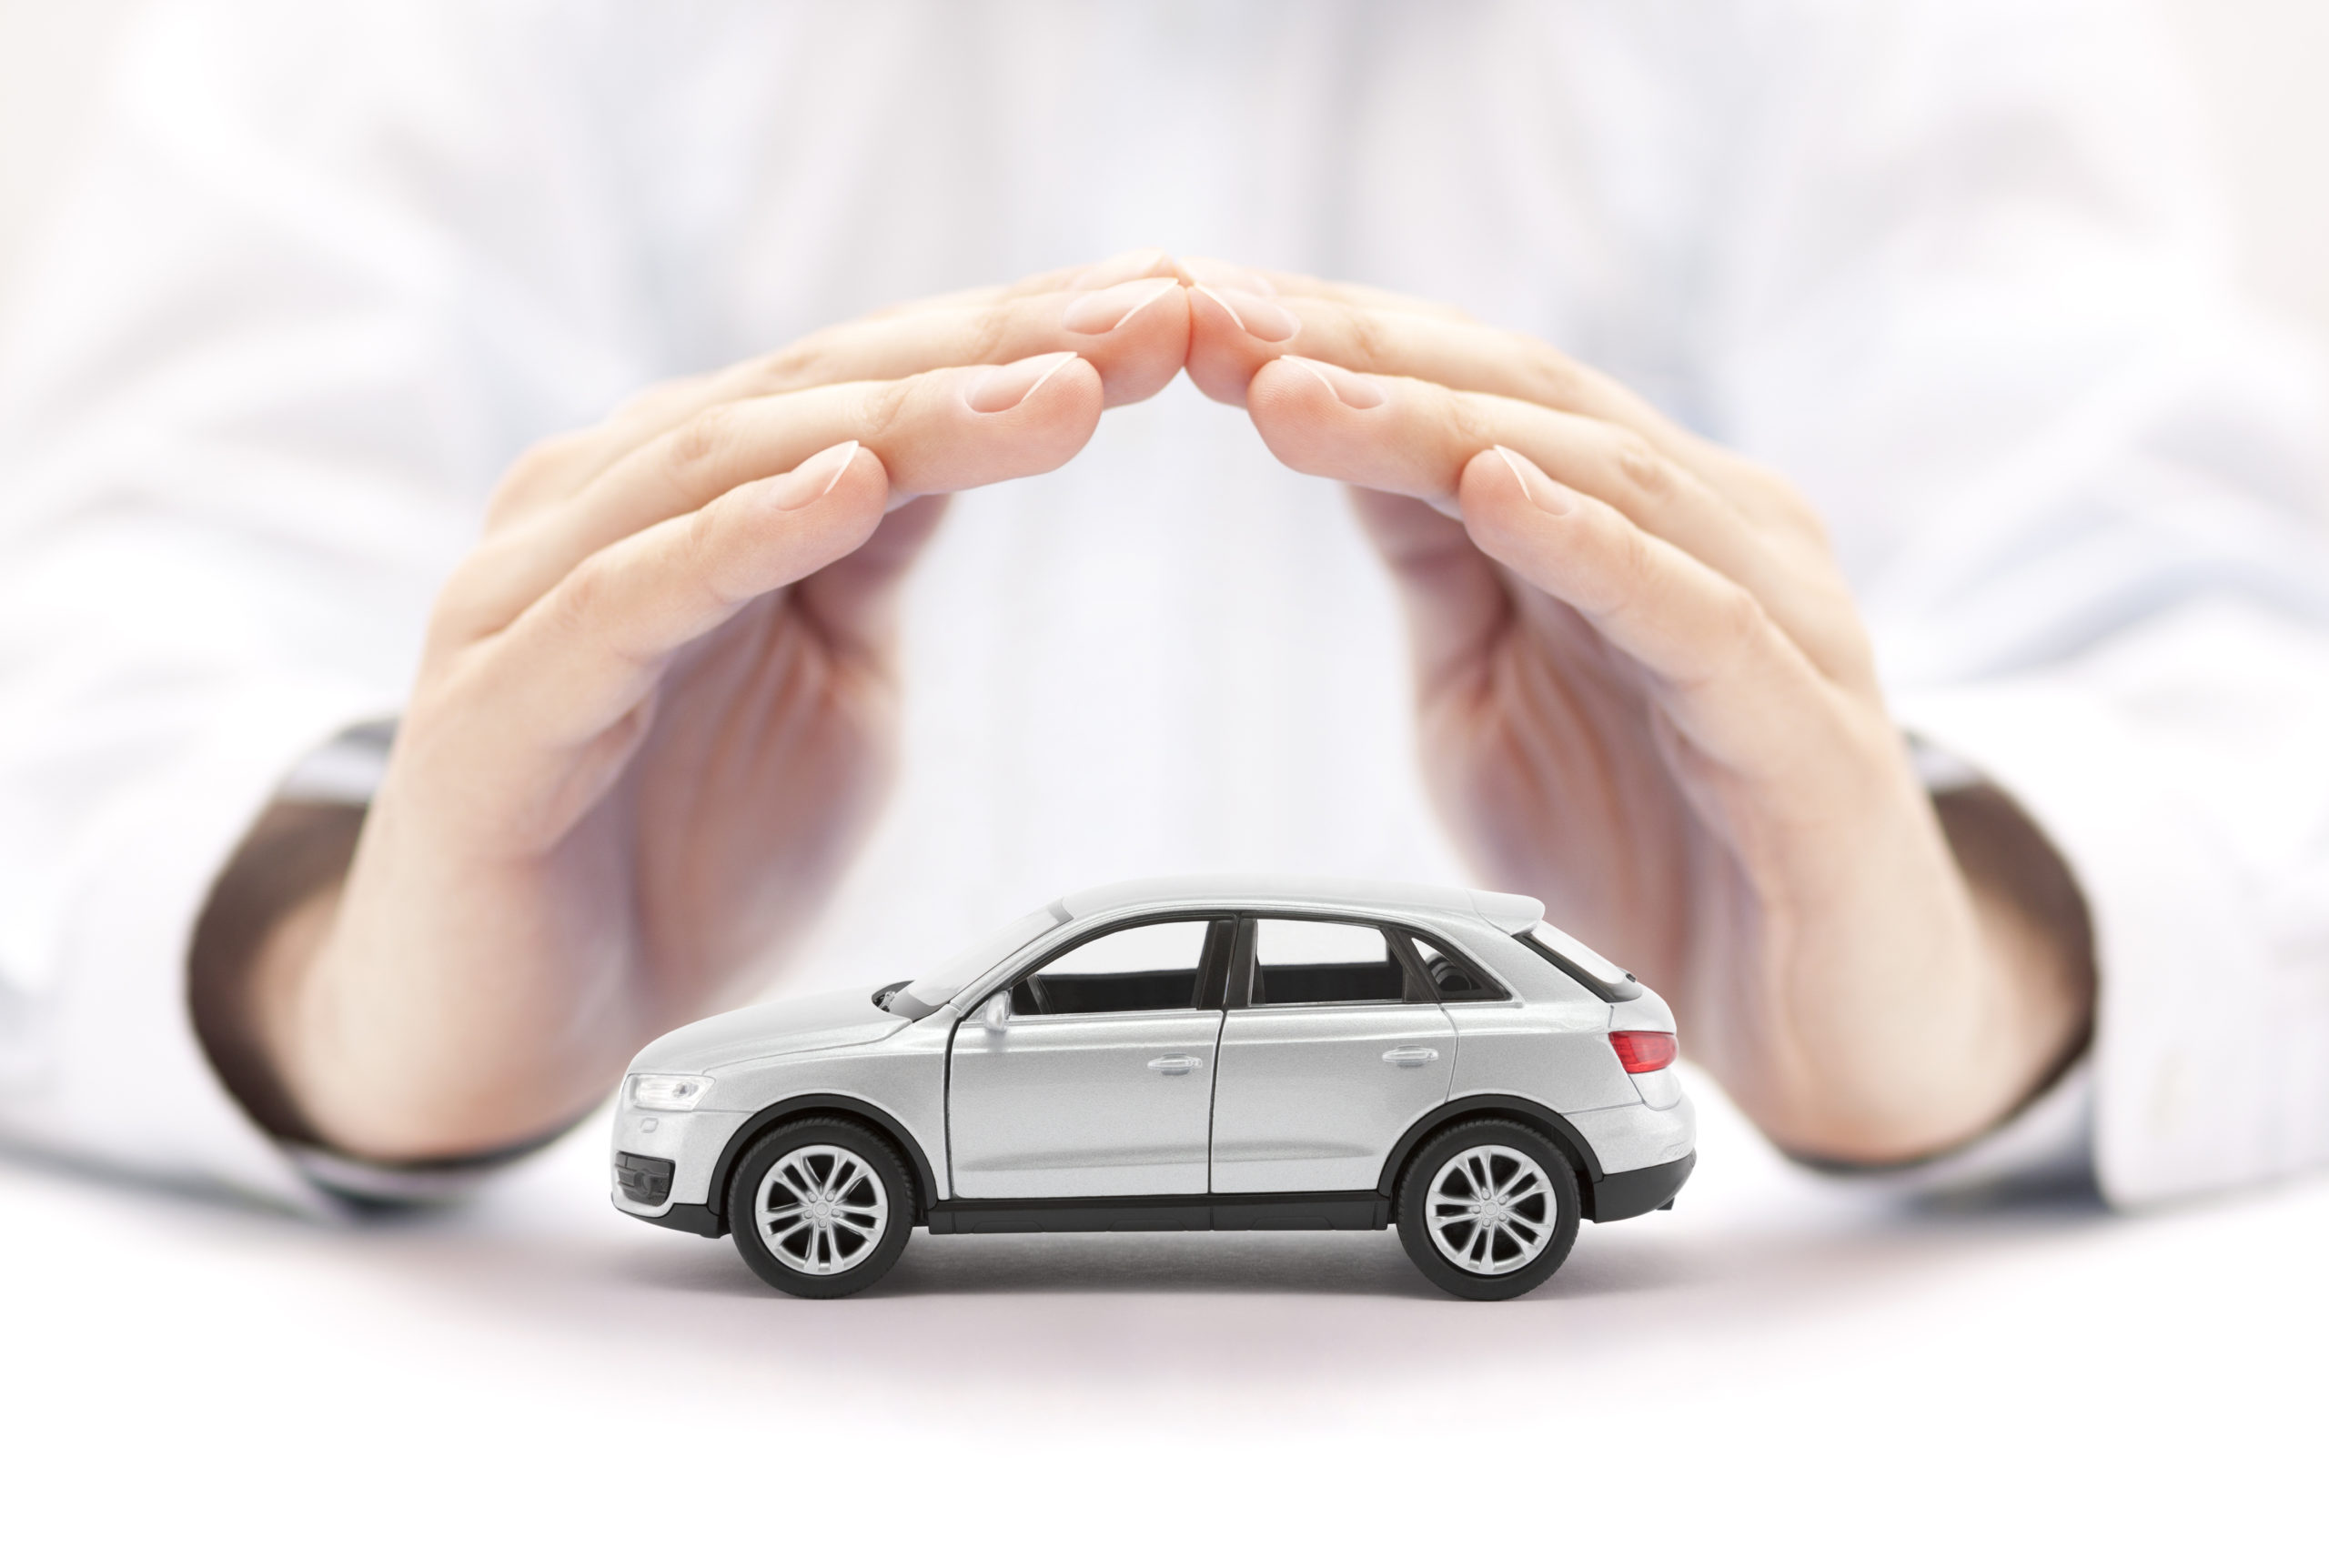 atlanta car insurance requirements and quotes